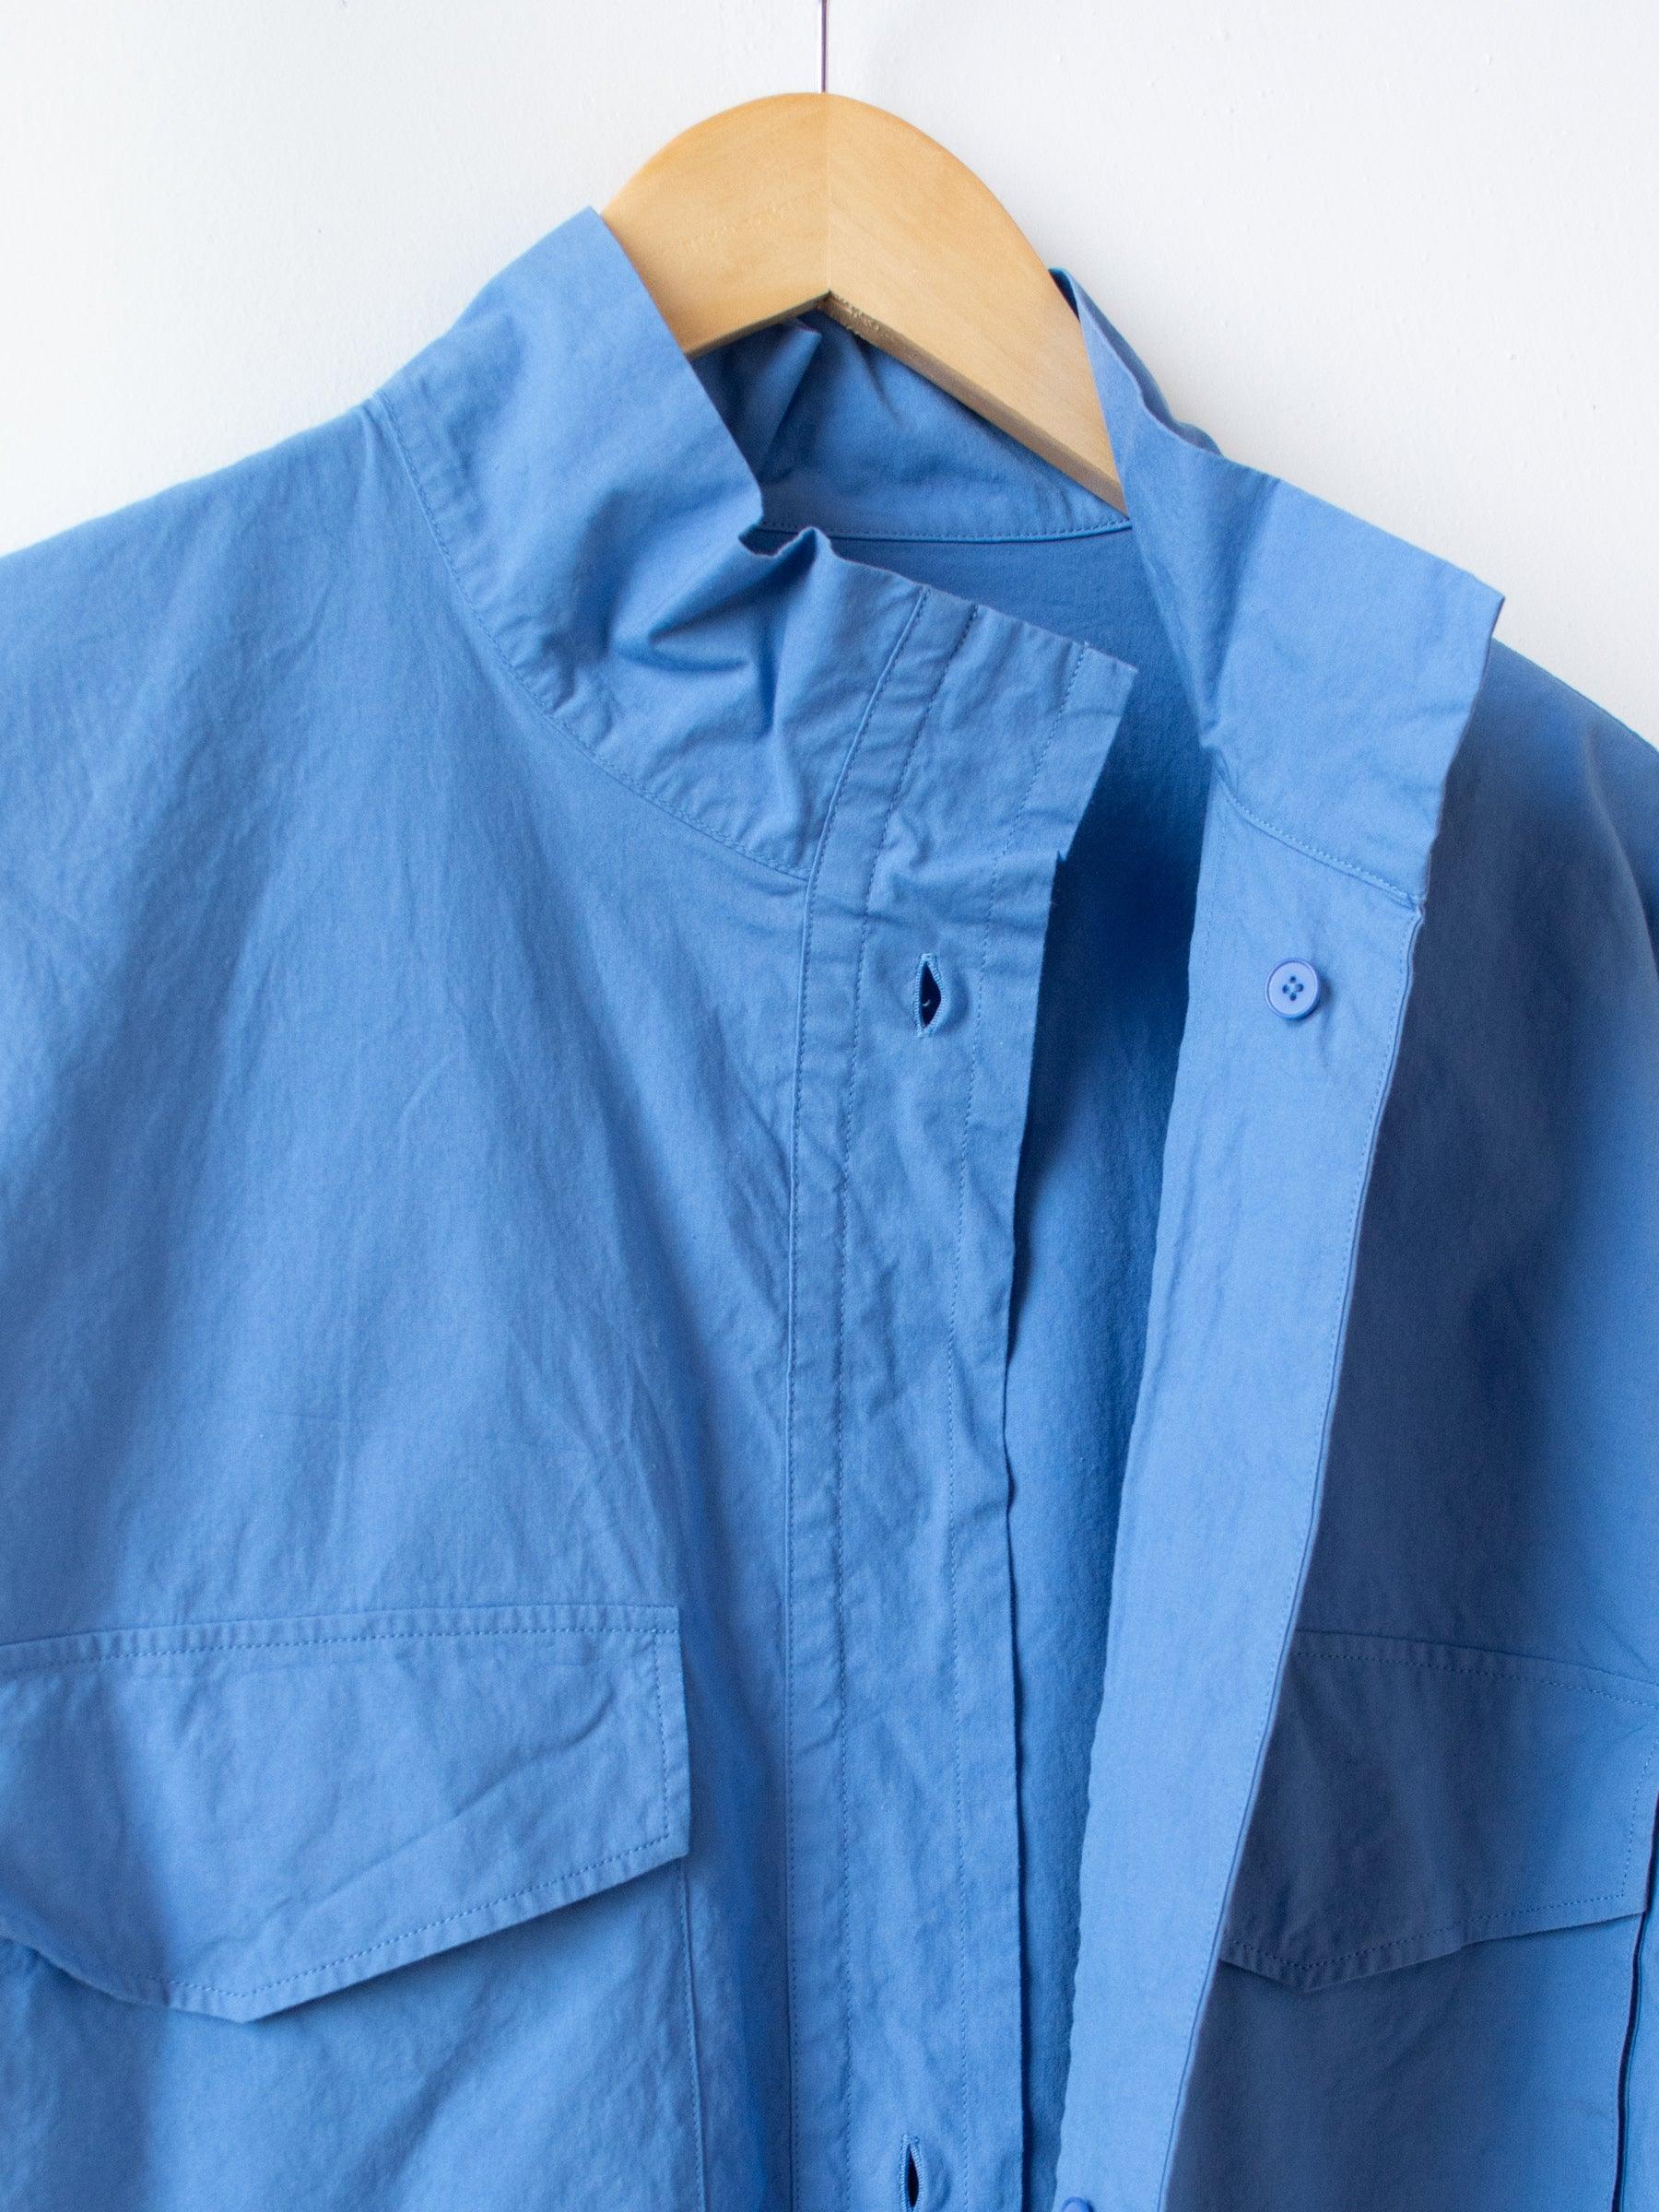 Namu Shop - S H Flight Shirt - Blue